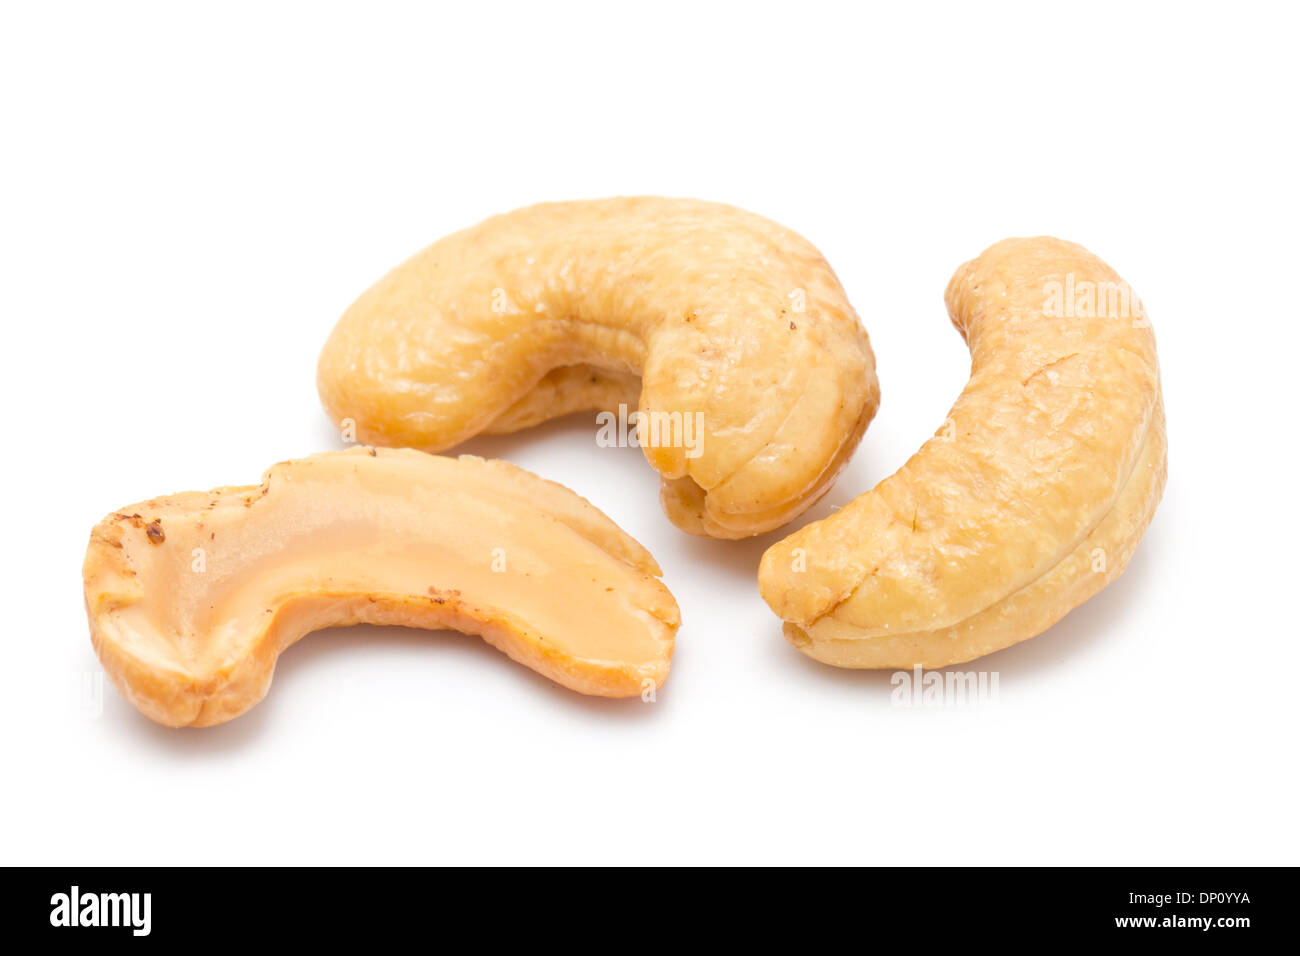 Cashew nuts isolated on white background. Stock Photo